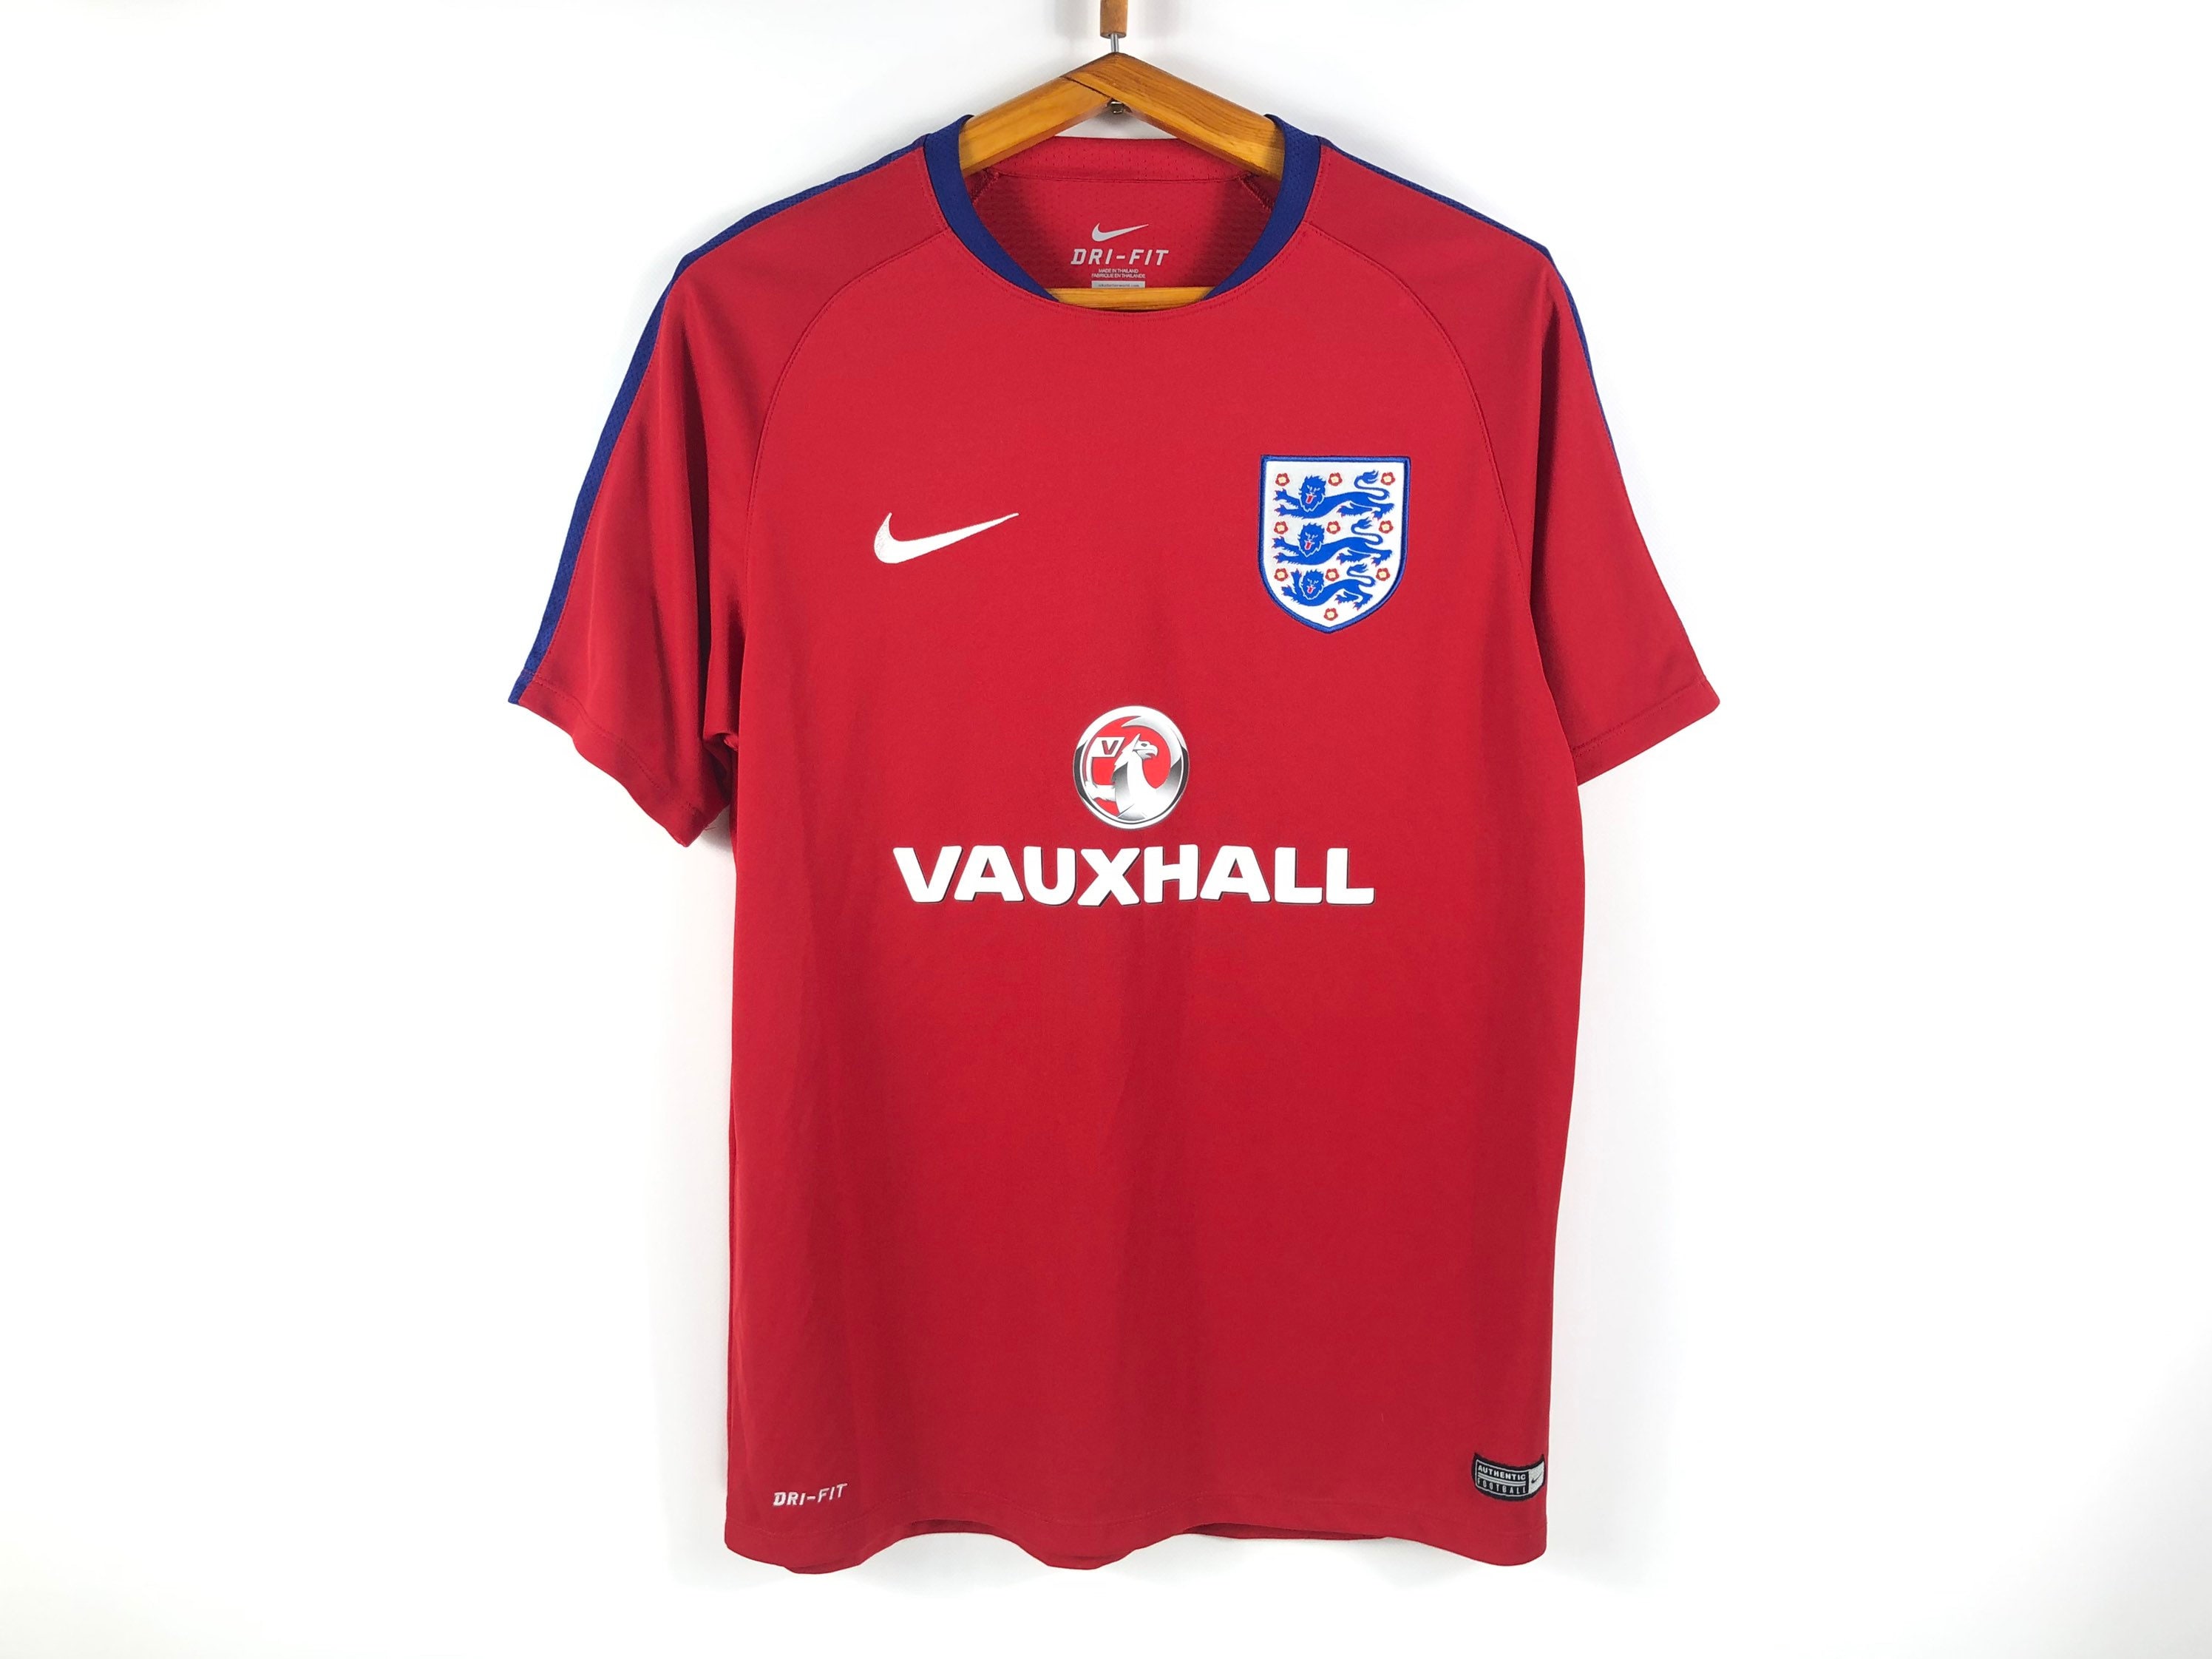 merknaam Omdat Ontbering England Nike Training Adult Size L Football Soccer Shirt Top - Etsy